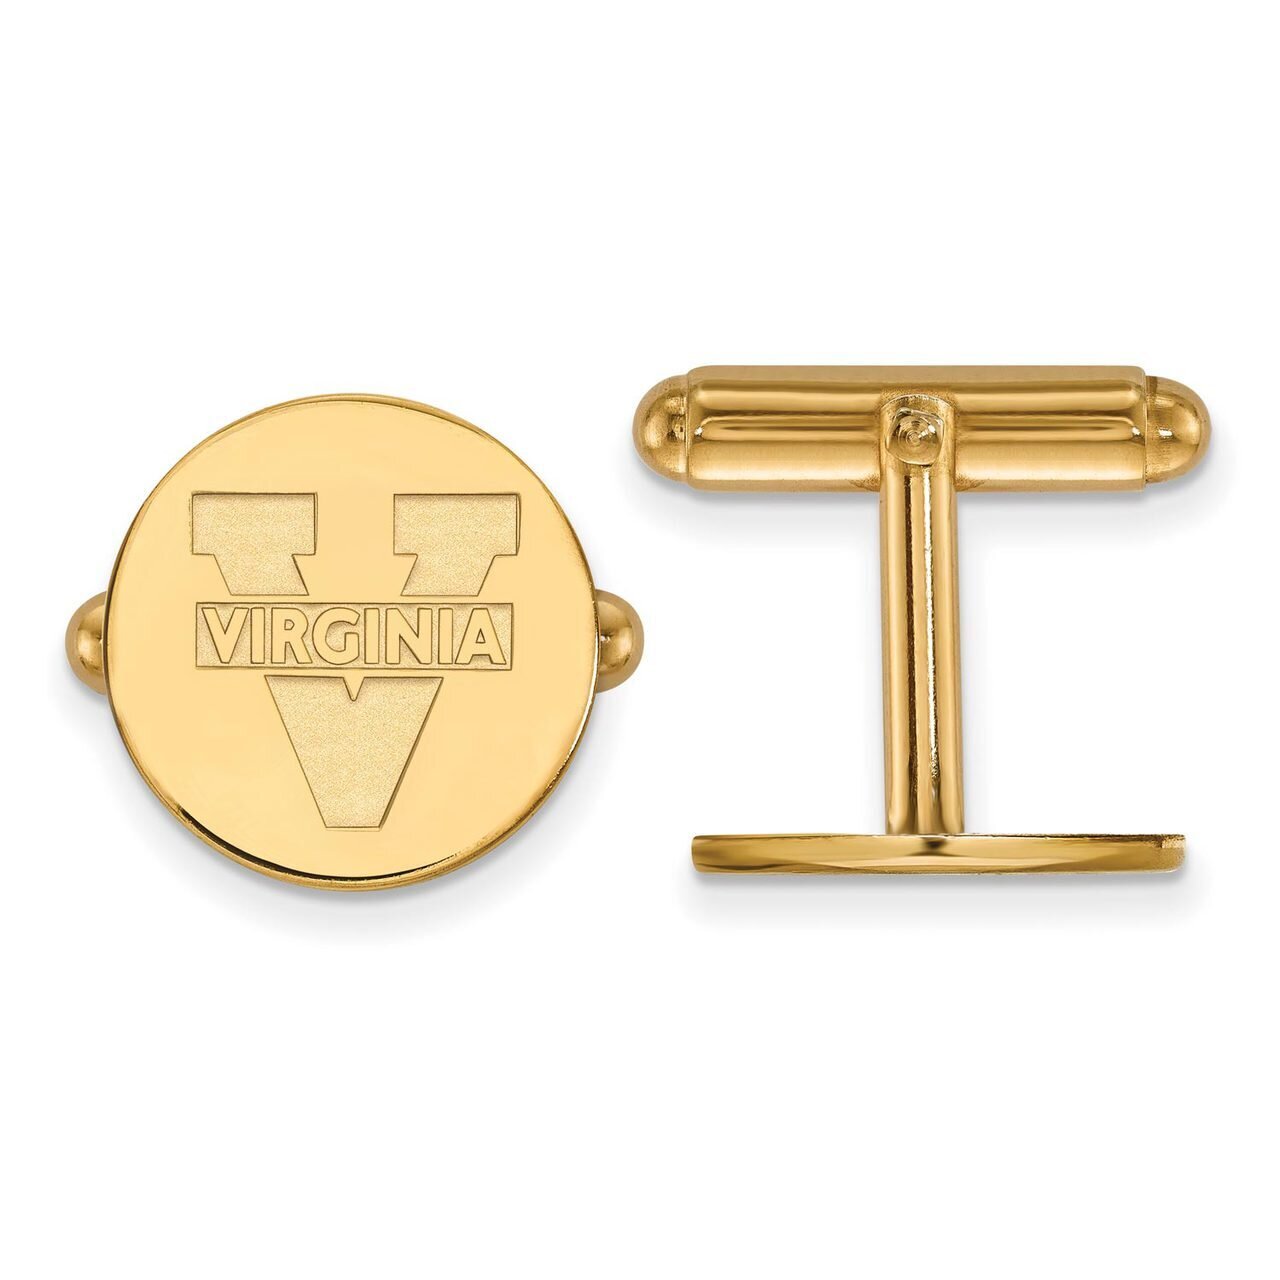 University of Virginia Cufflinks Gold-plated Silver GP012UVA